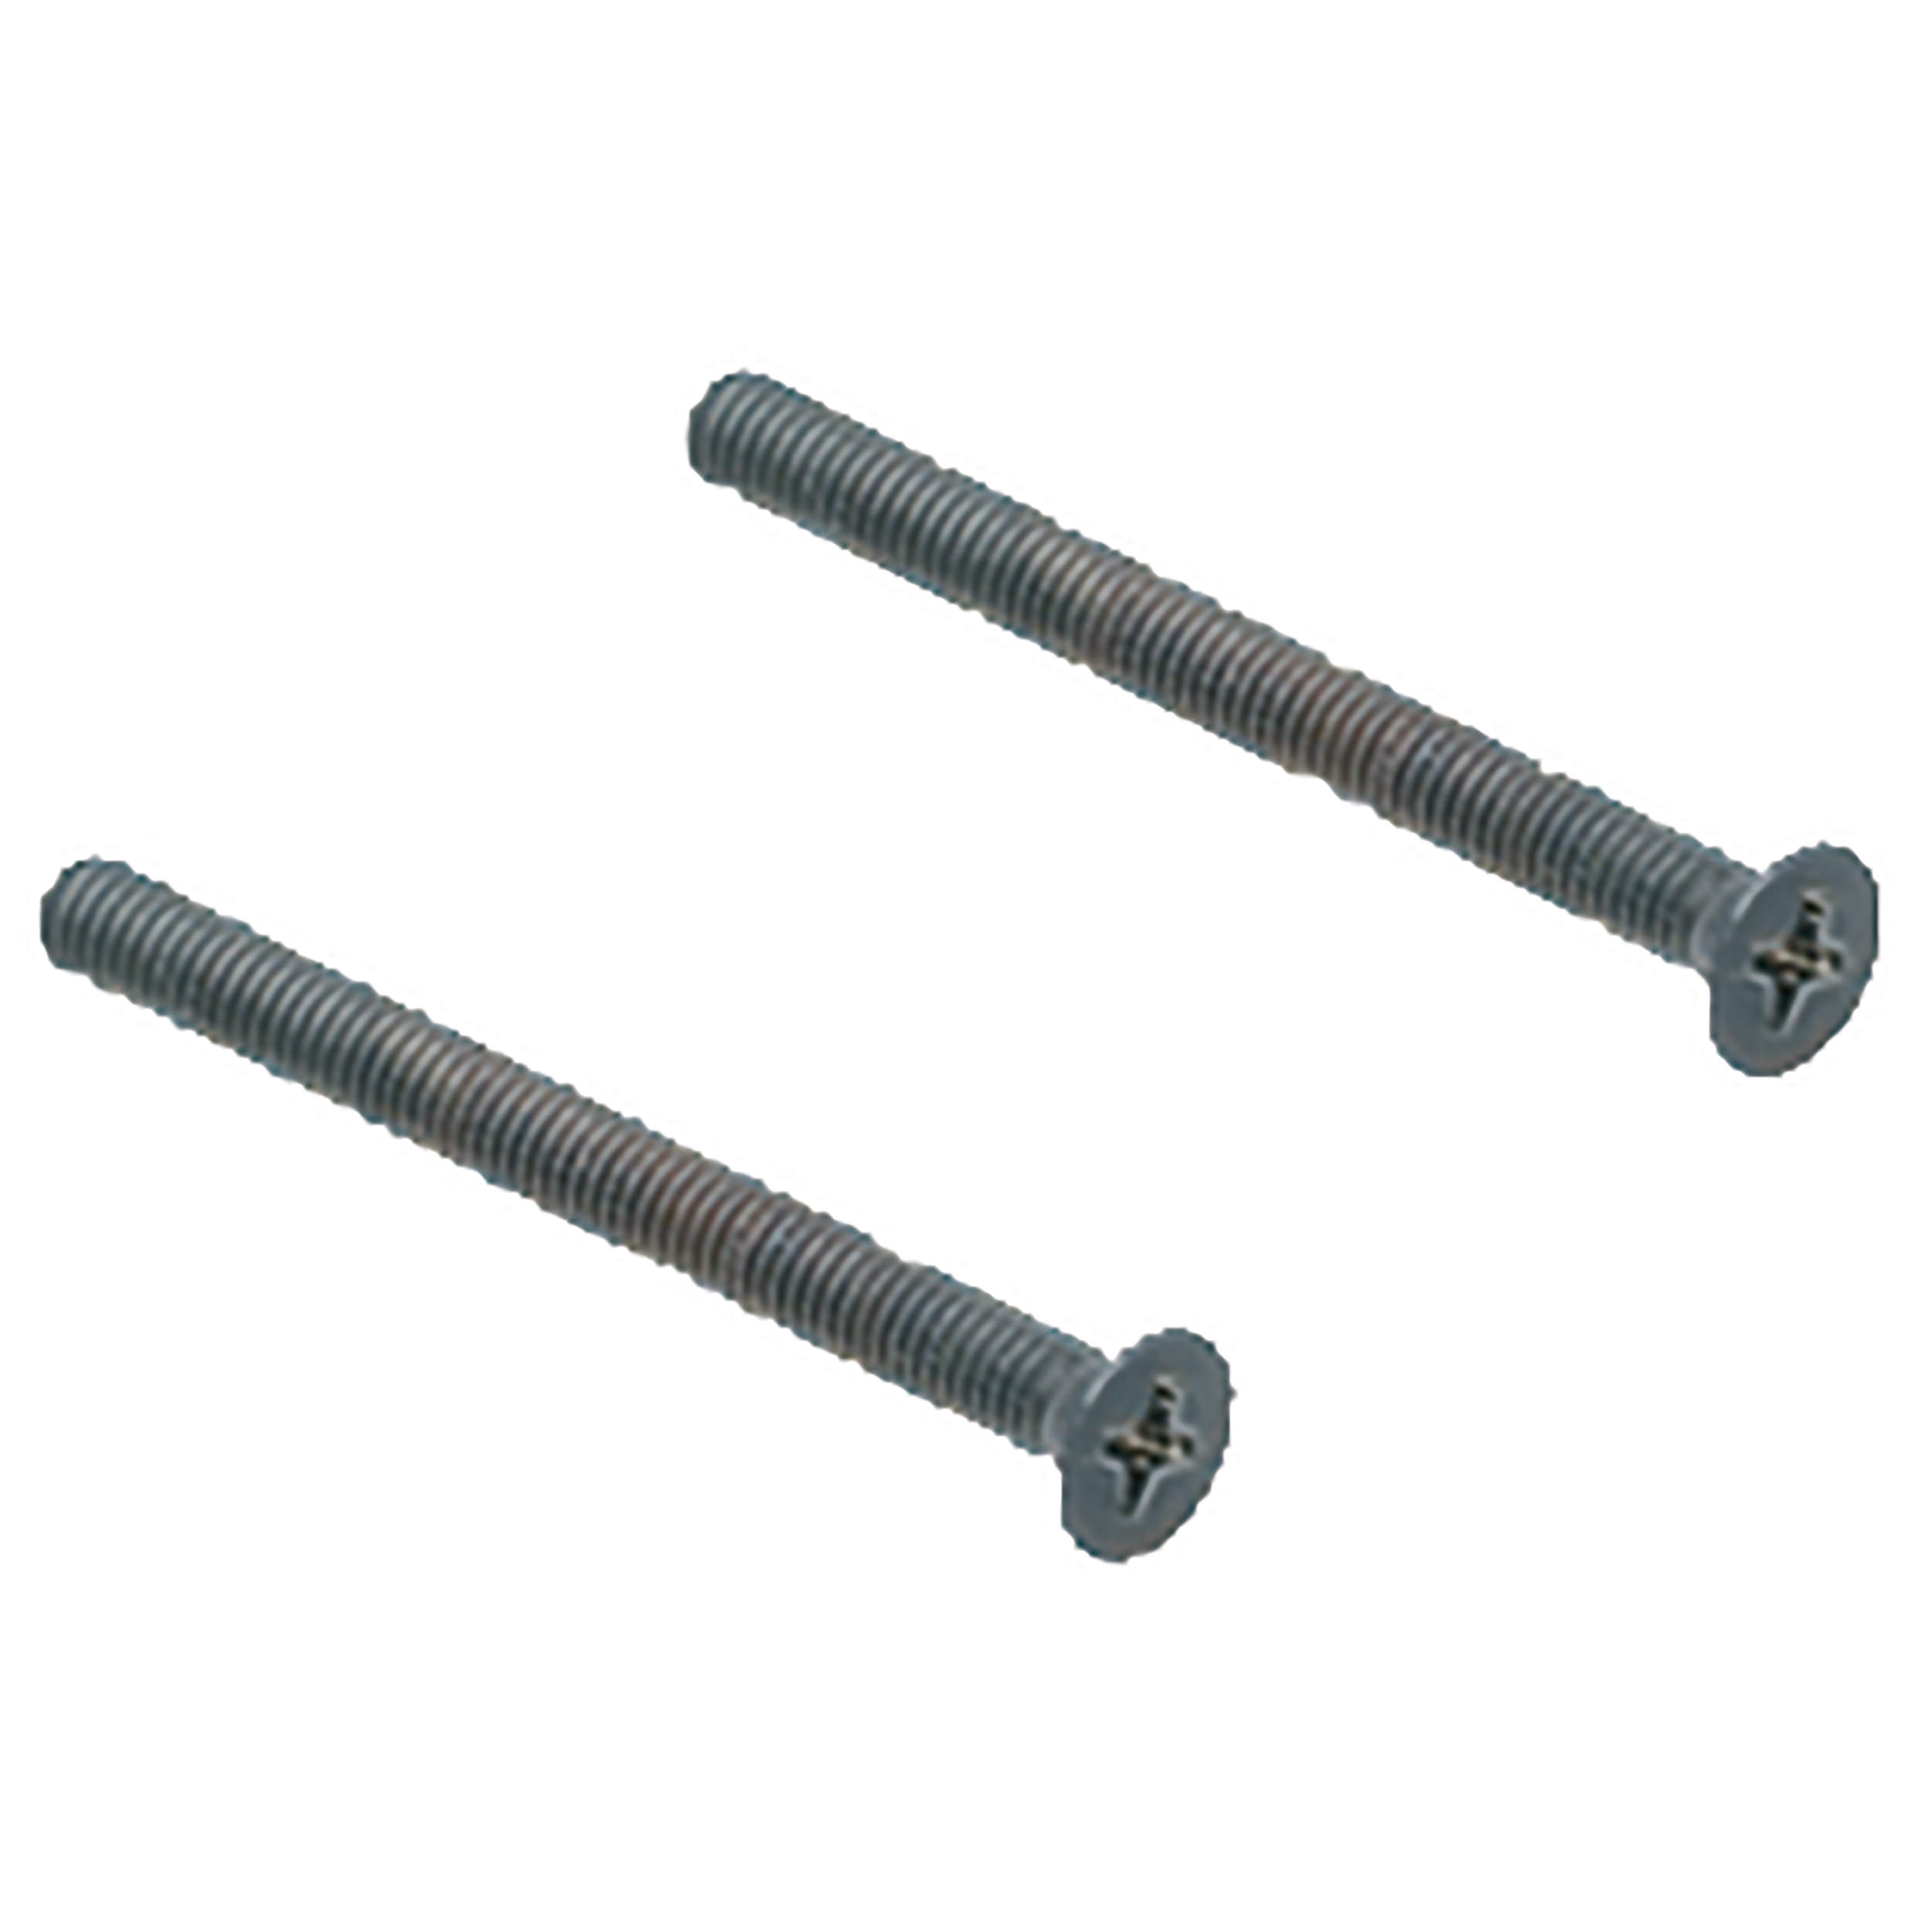 Mounting screw (2 of set) variobloc, suitable for: BG 20, BG 30; dimensions: 2 × M4 × 40